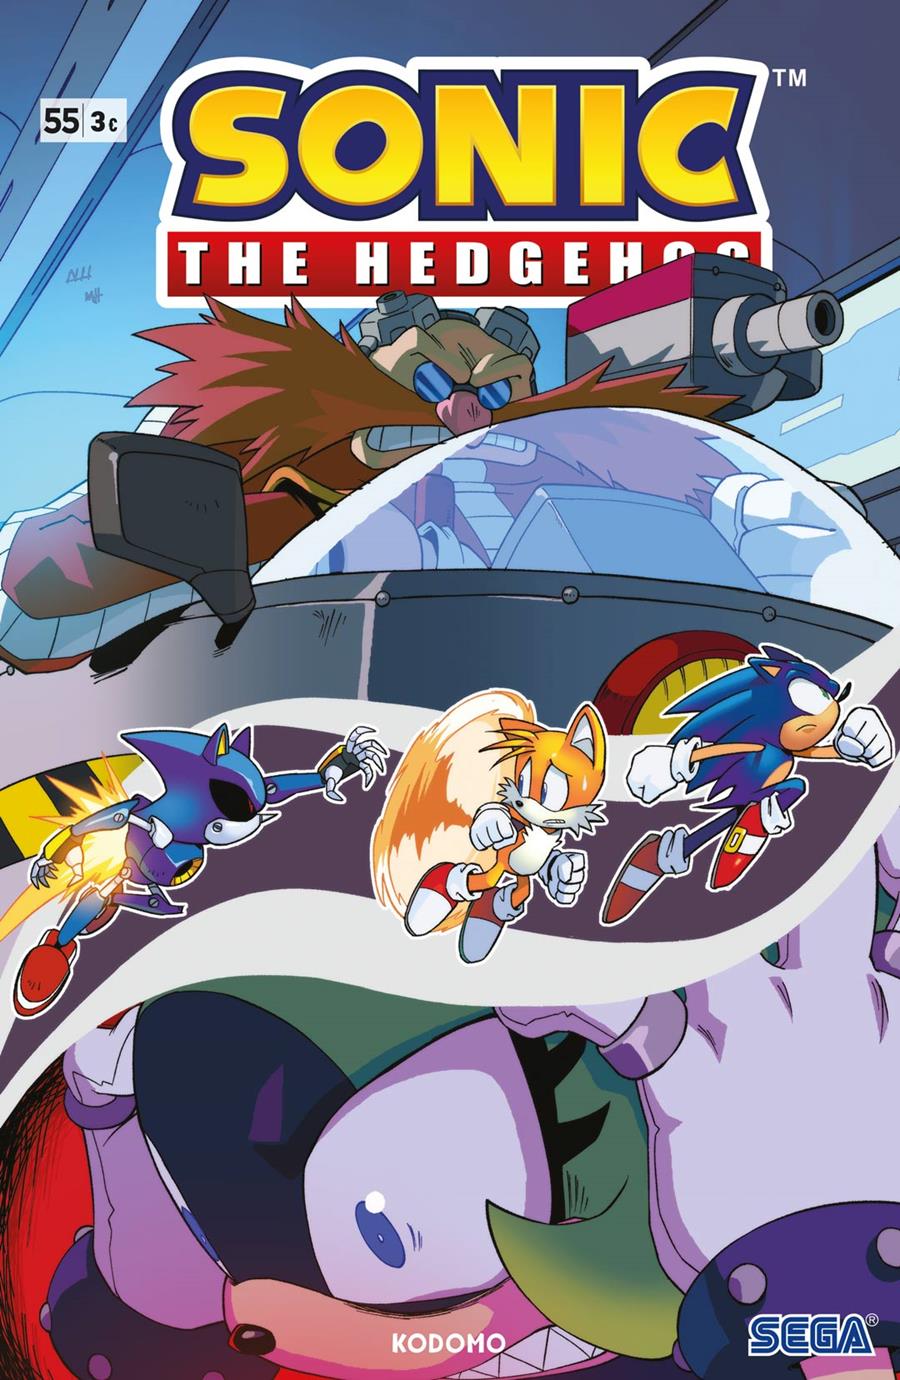 Sonic The Hedgehog núm. 55 | N0324-ECC35 | Adam Bryce Thomas / Evan Stanley | Terra de Còmic - Tu tienda de cómics online especializada en cómics, manga y merchandising